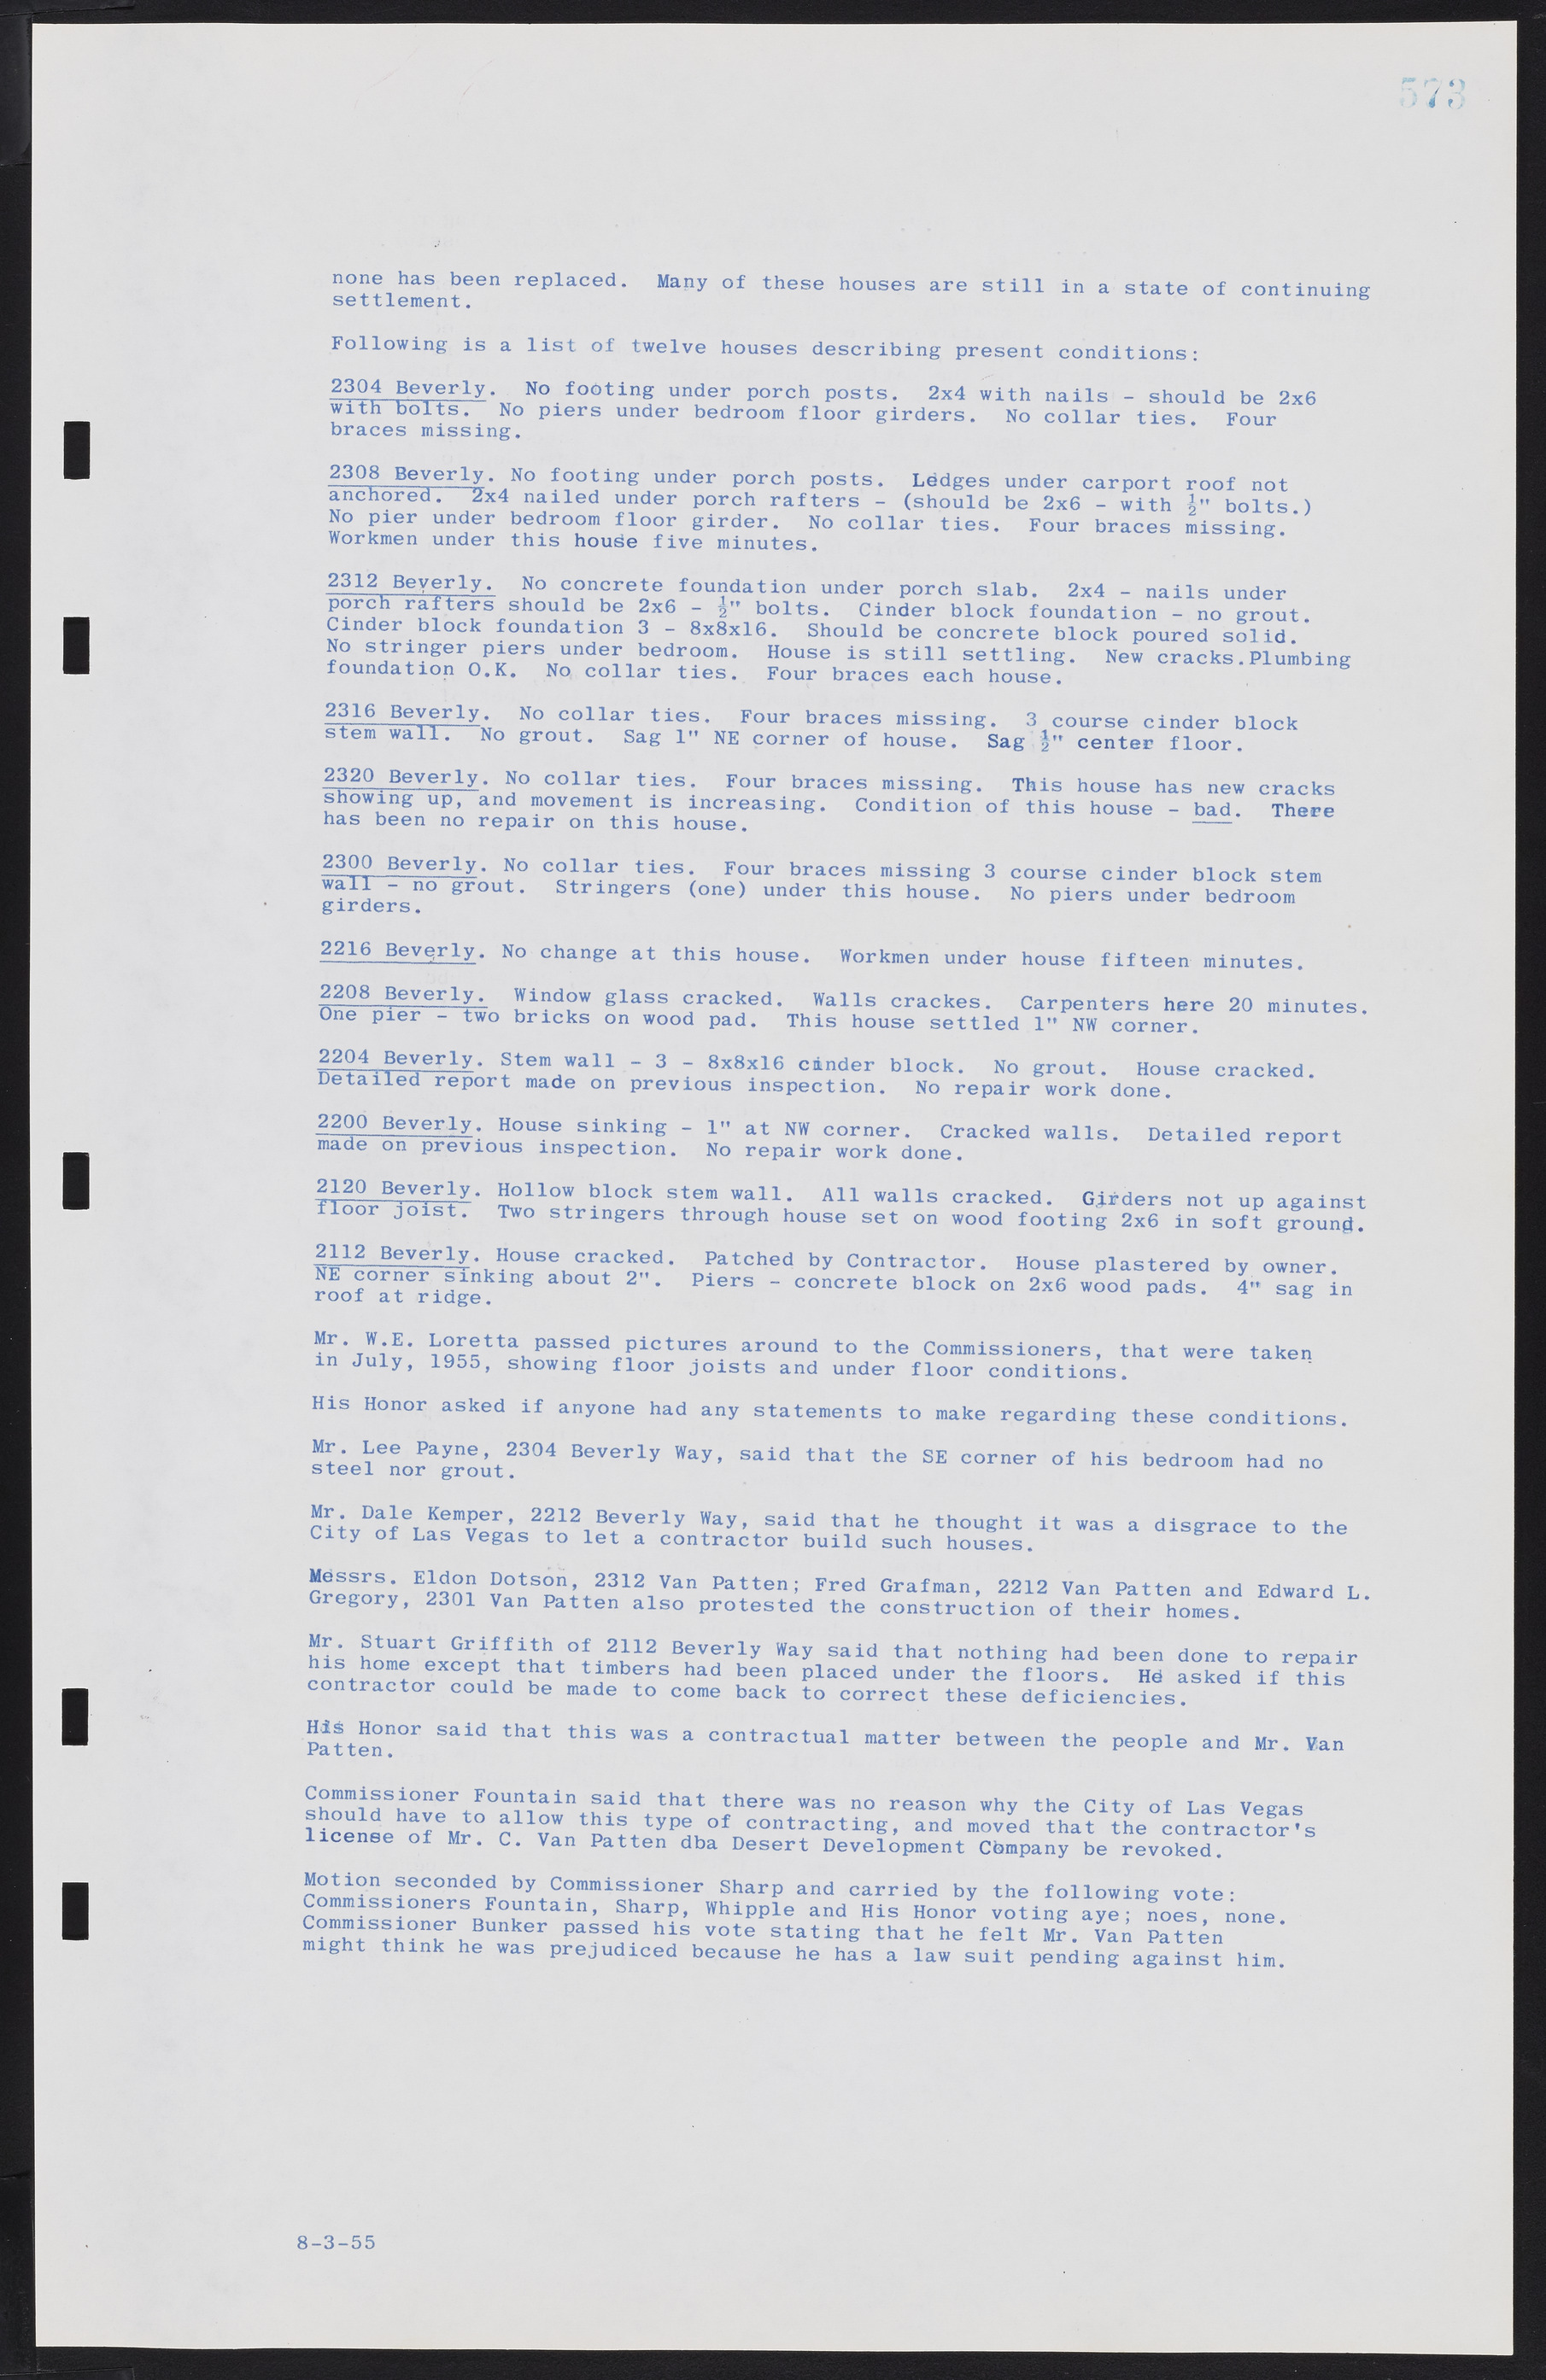 Las Vegas City Commission Minutes, February 17, 1954 to September 21, 1955, lvc000009-579